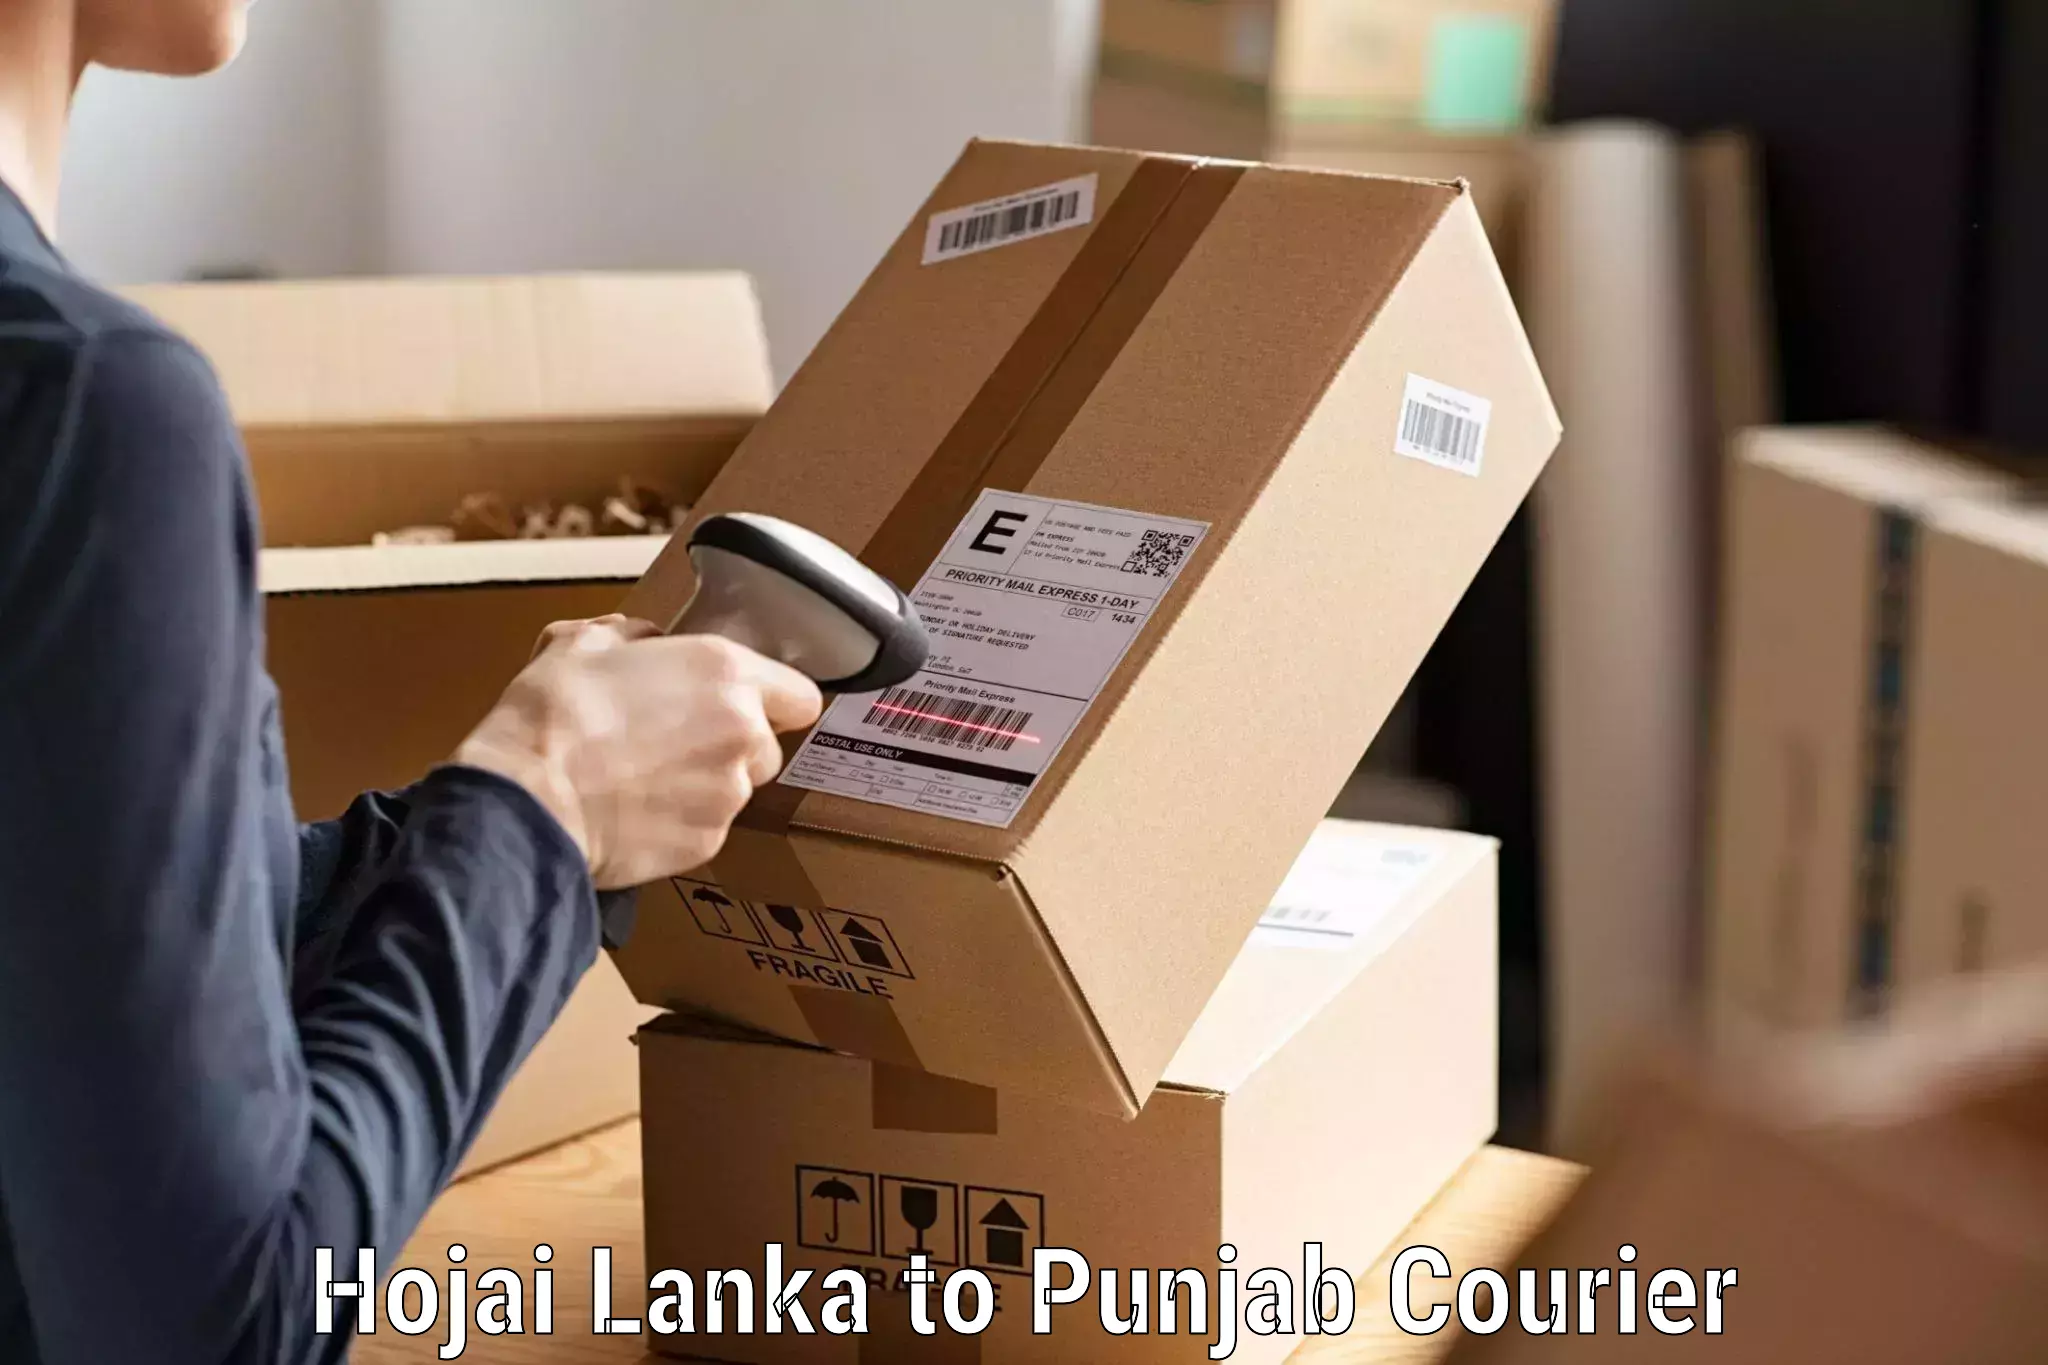 Efficient order fulfillment Hojai Lanka to Punjab